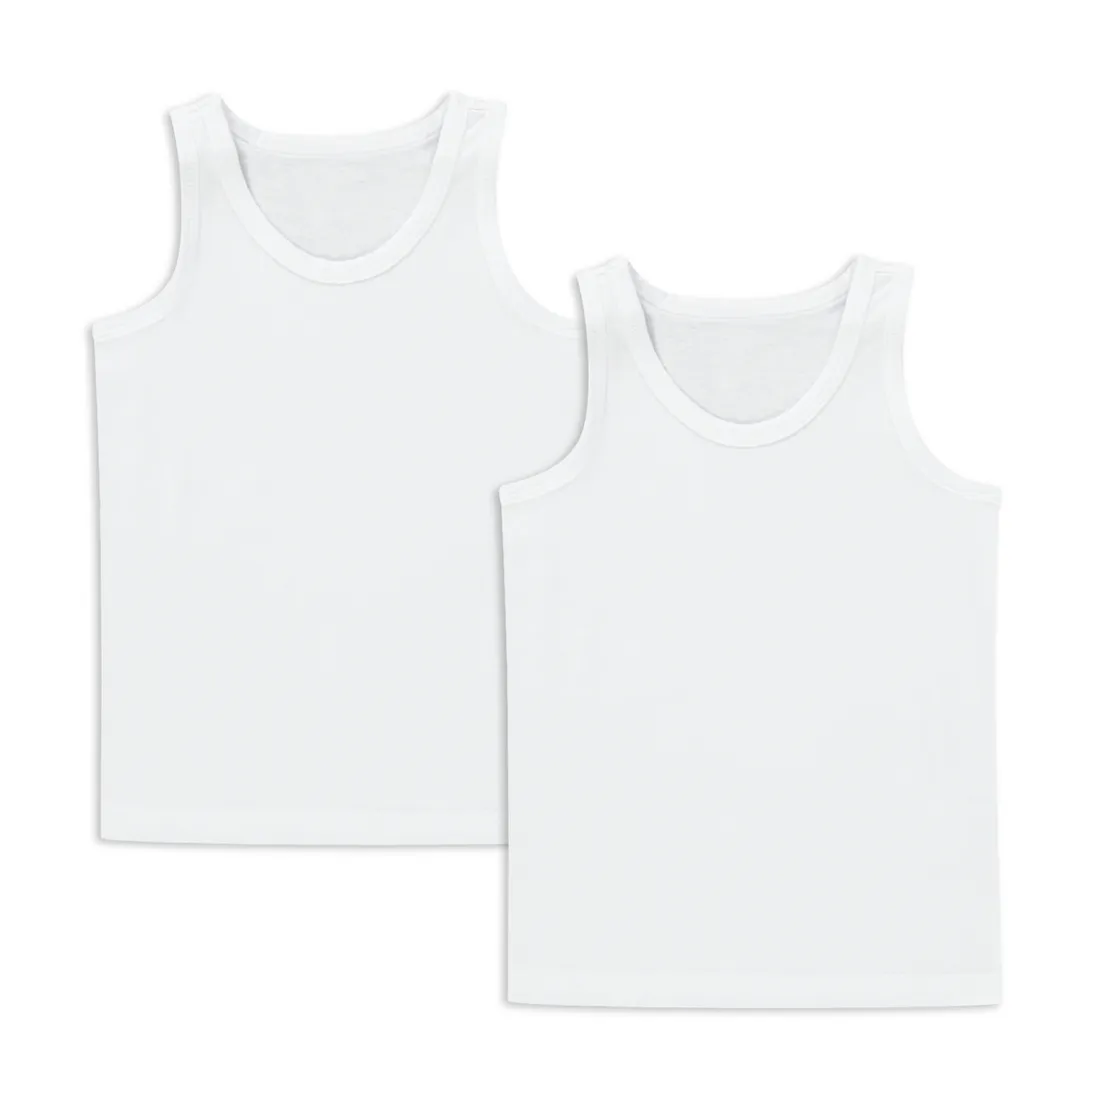 2 Pack sleeveless vests white - BOYS 2-8 YEARS - Vests | Ackermans